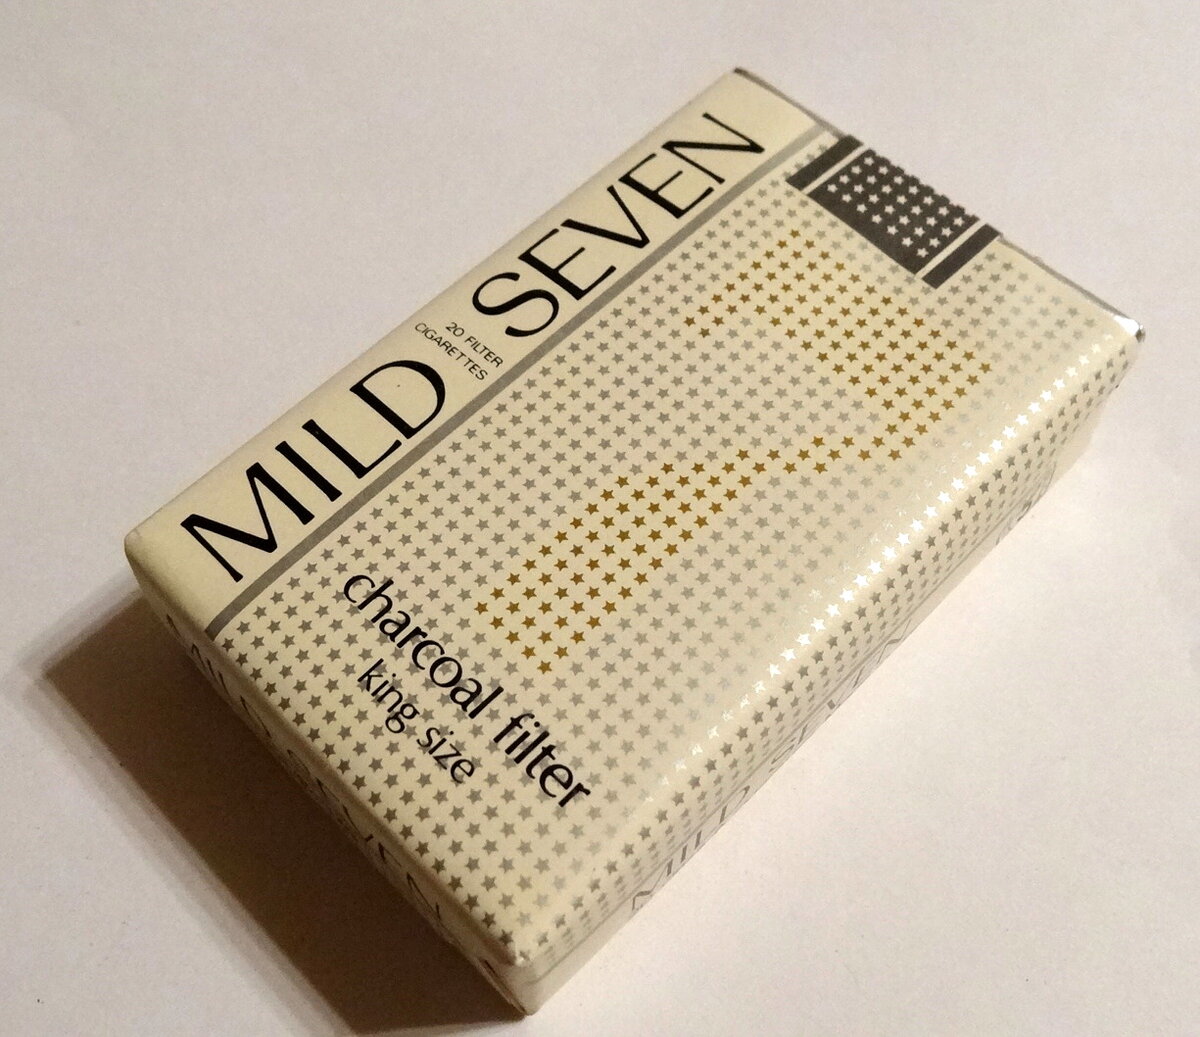 Mild Seven (Табак Милд Севен) / Xi'an Taima